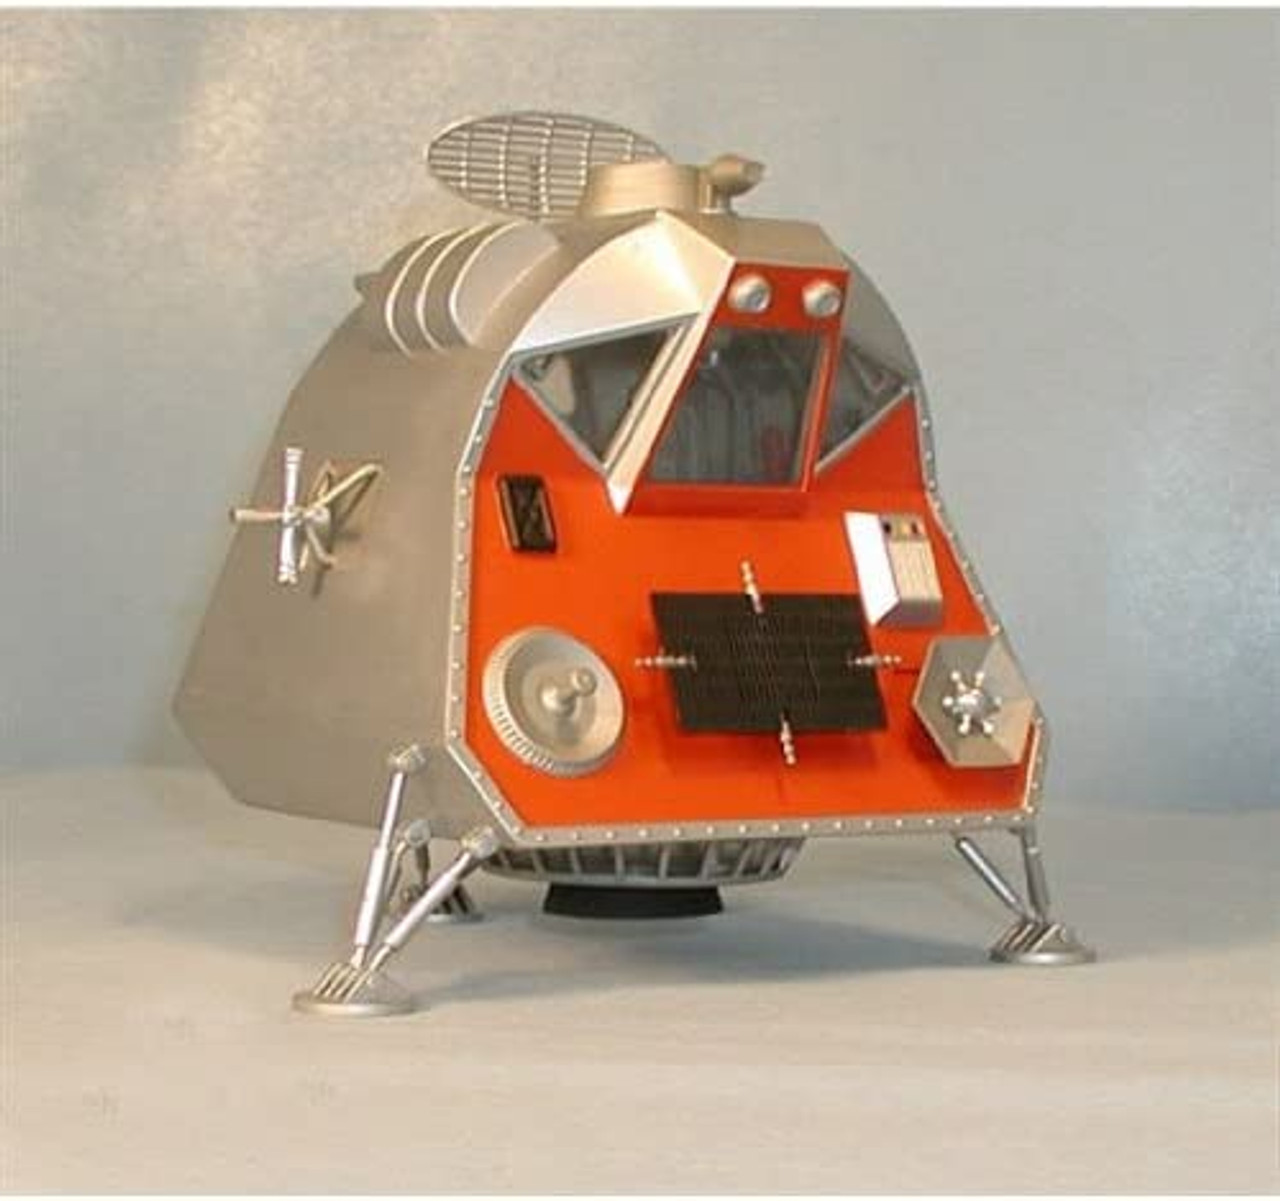 1/24 Moebius Lost in Space Space Pod Plastic Model Kit